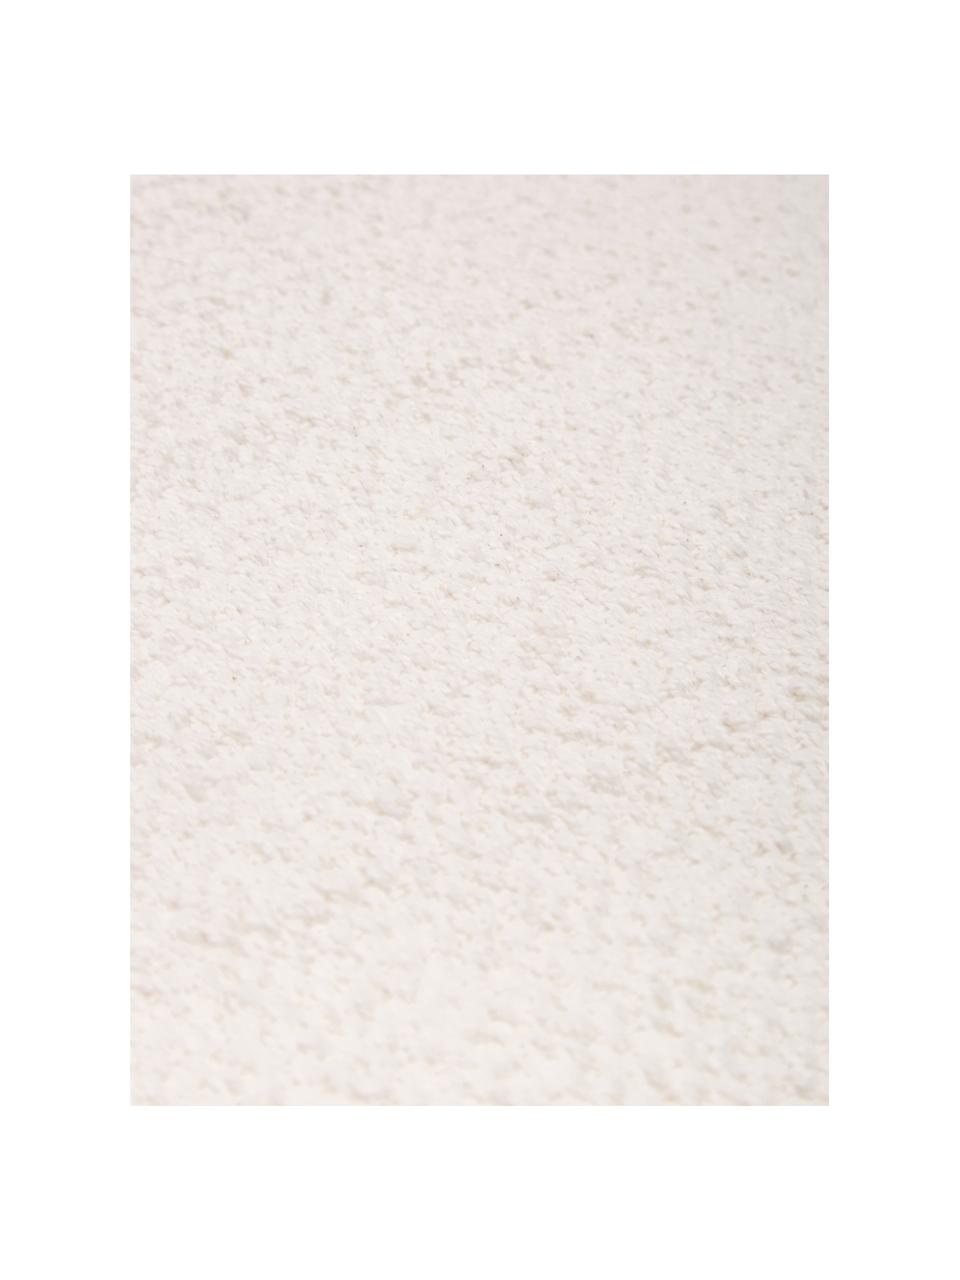 Tapis en coton blanc crème tissé à la main Agneta, 100 % coton, Blanc, larg. 70 x long. 140 cm (taille XS)